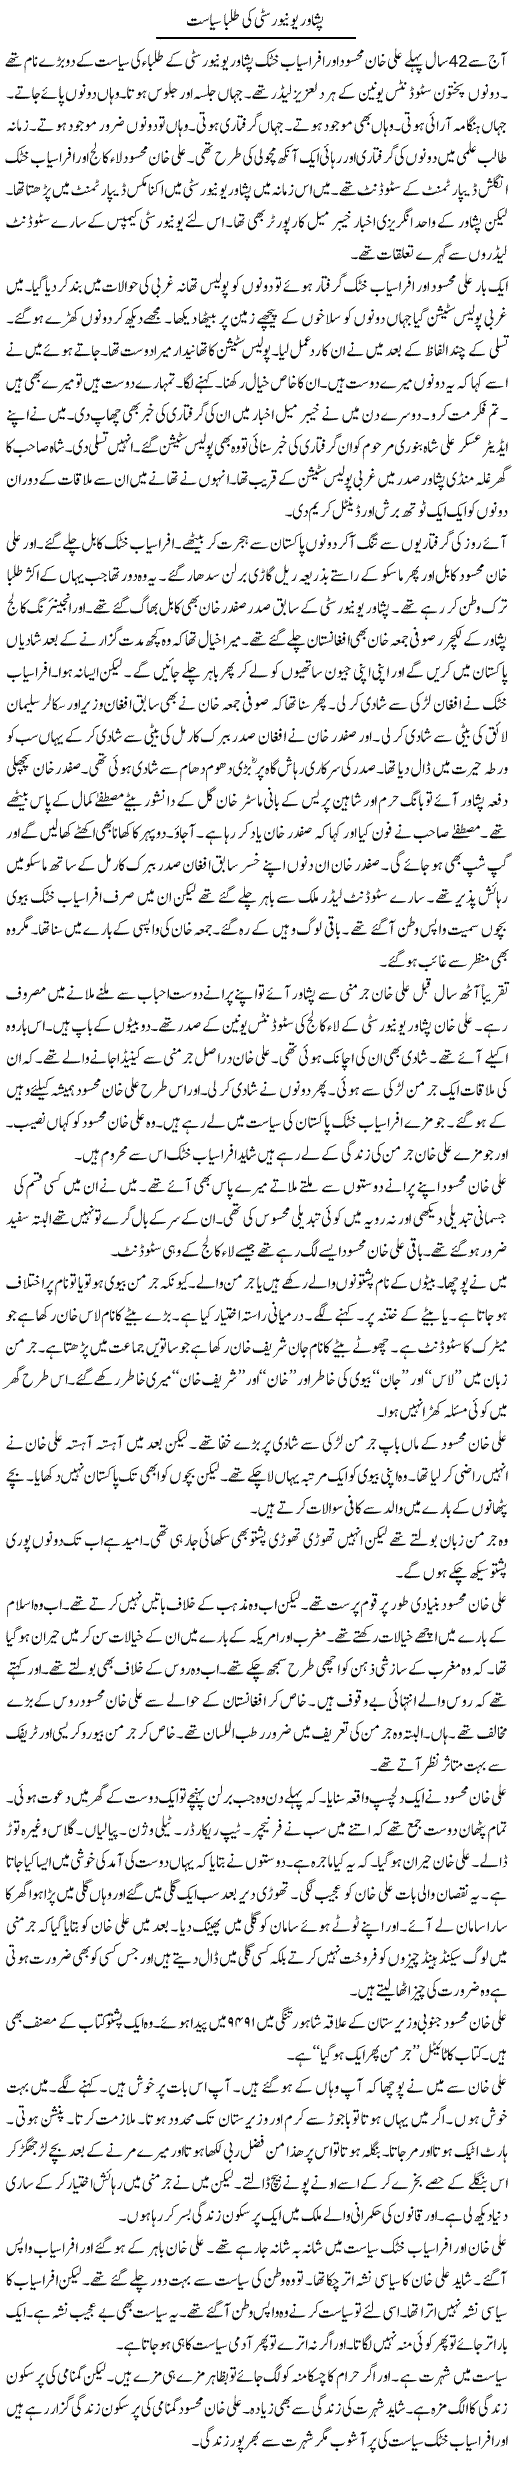 Peshawar University Ki Taliba Siasat | Hafiz Sanaullah | Daily Urdu Columns